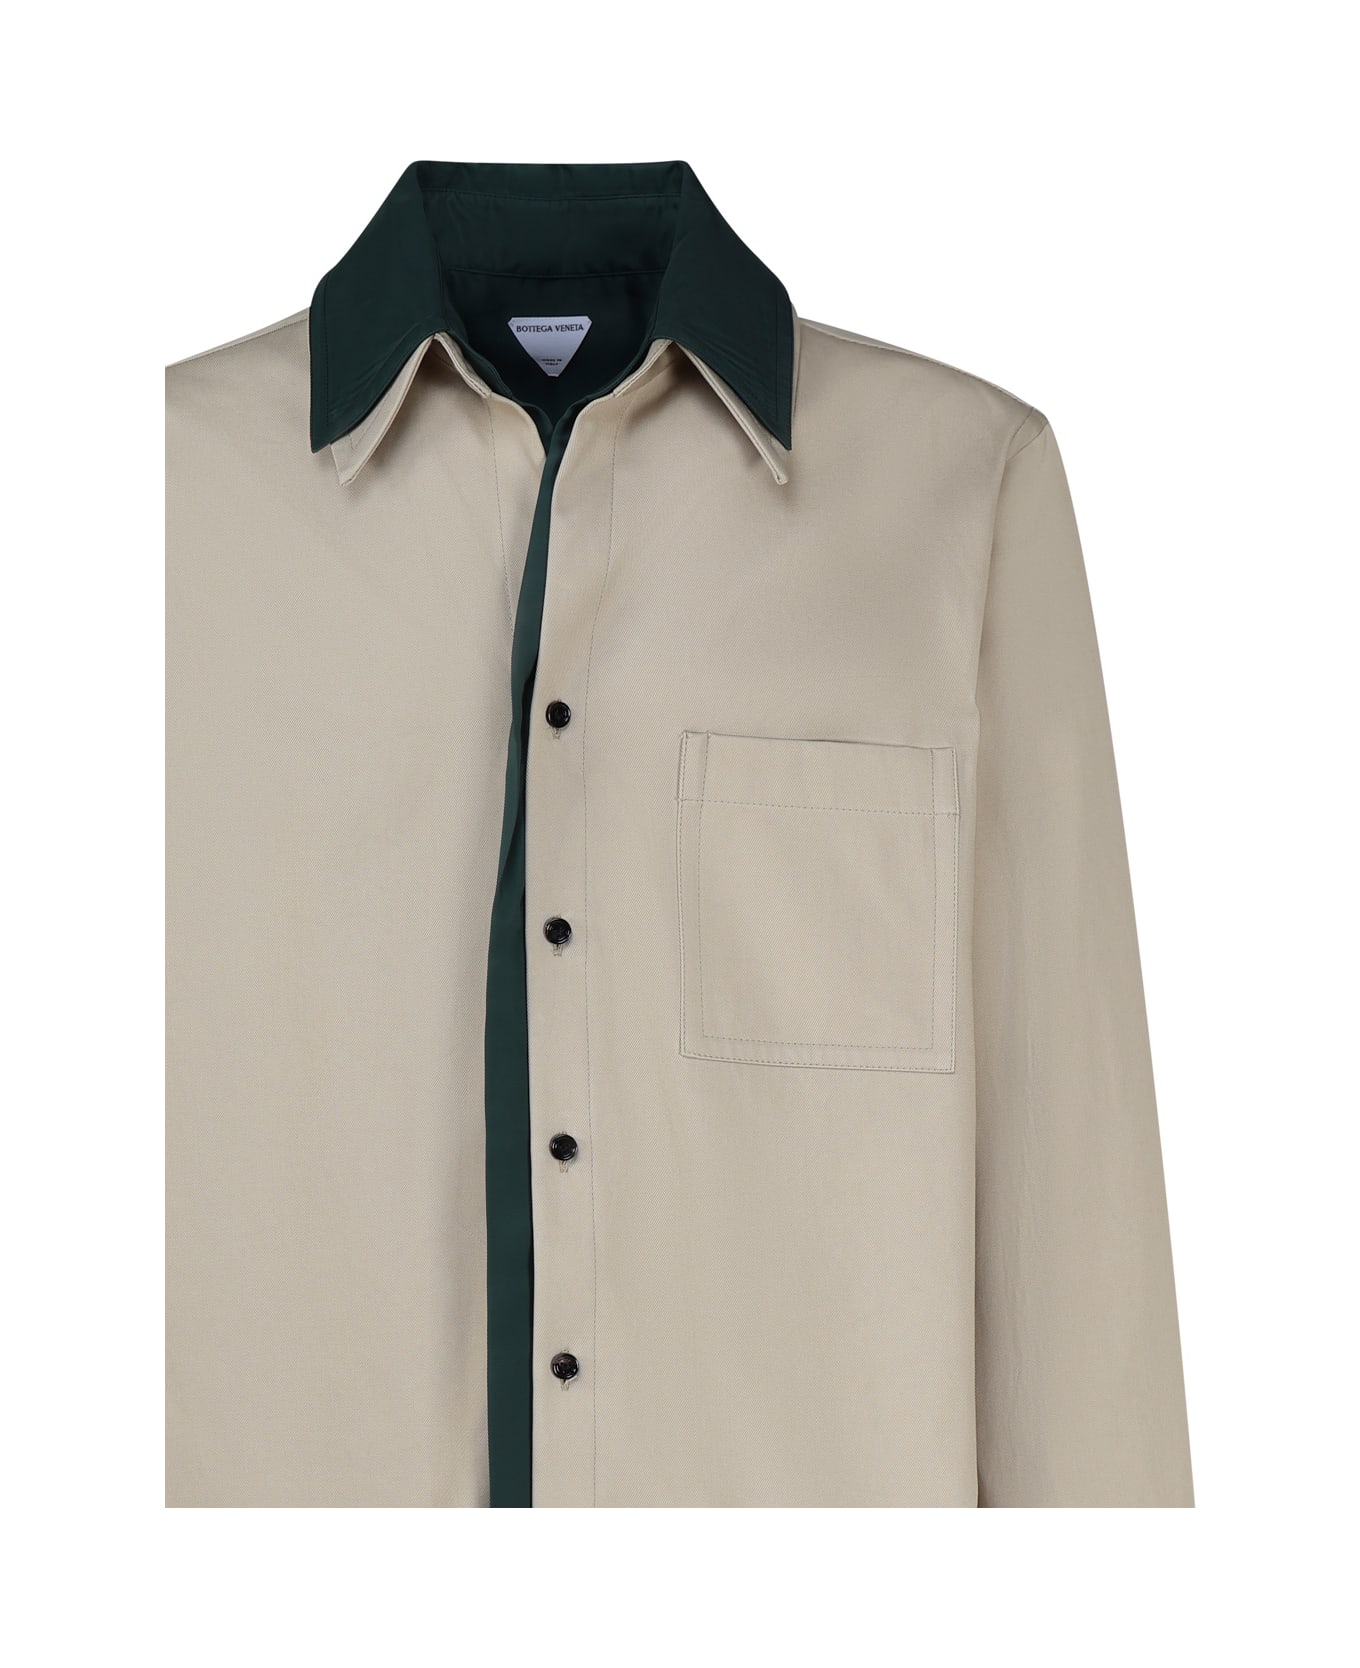 Bottega Veneta Double Layer Cotton Twill Shirt - Travertine/inkwell シャツ